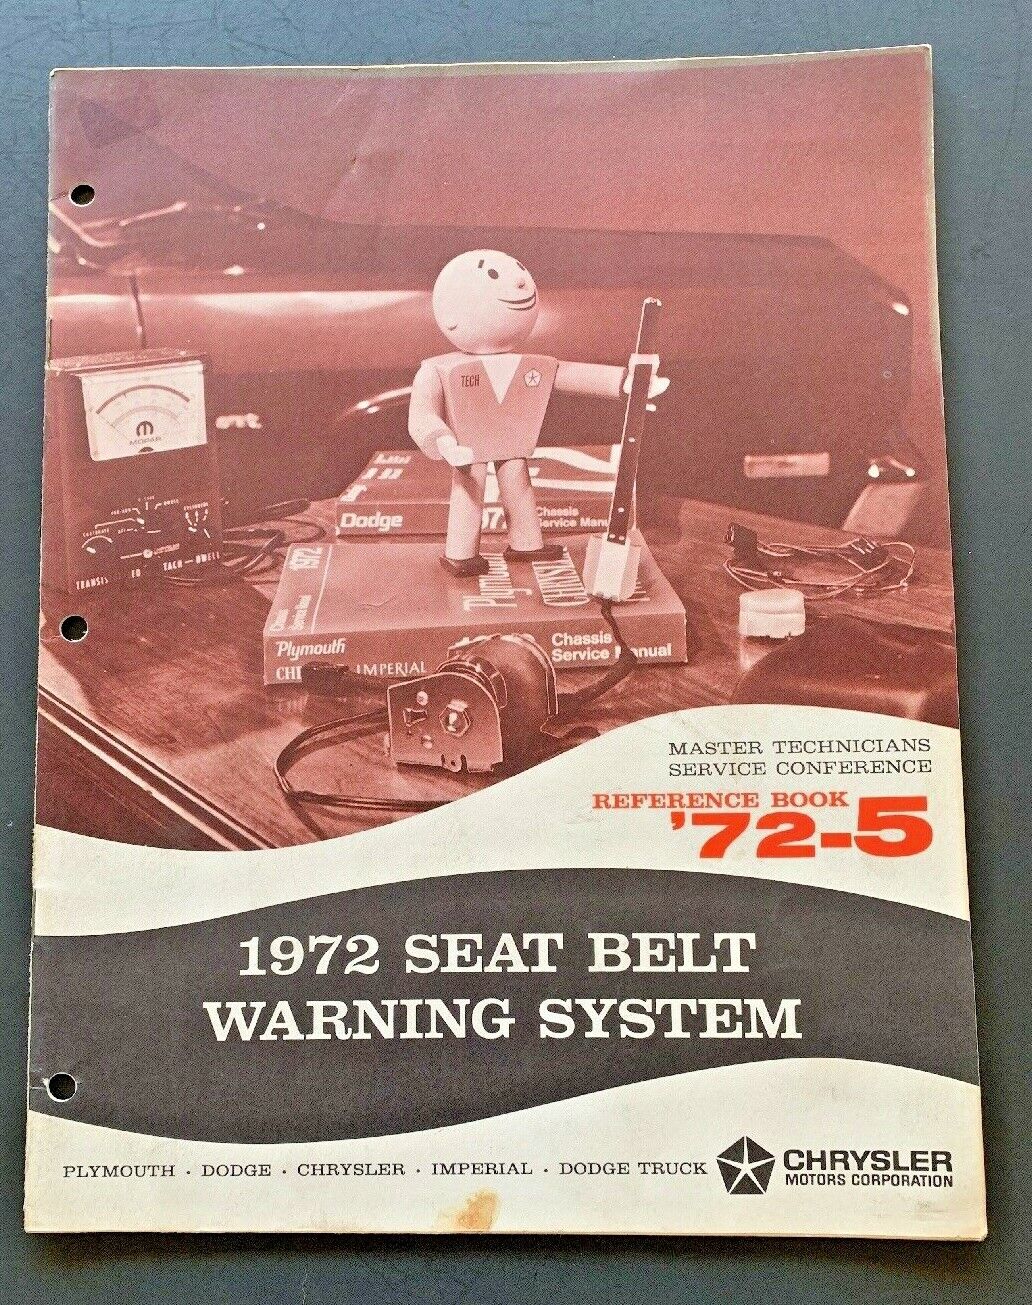 1972 Chrysler Service Reference Book 72-5 Seat Belt Warning System